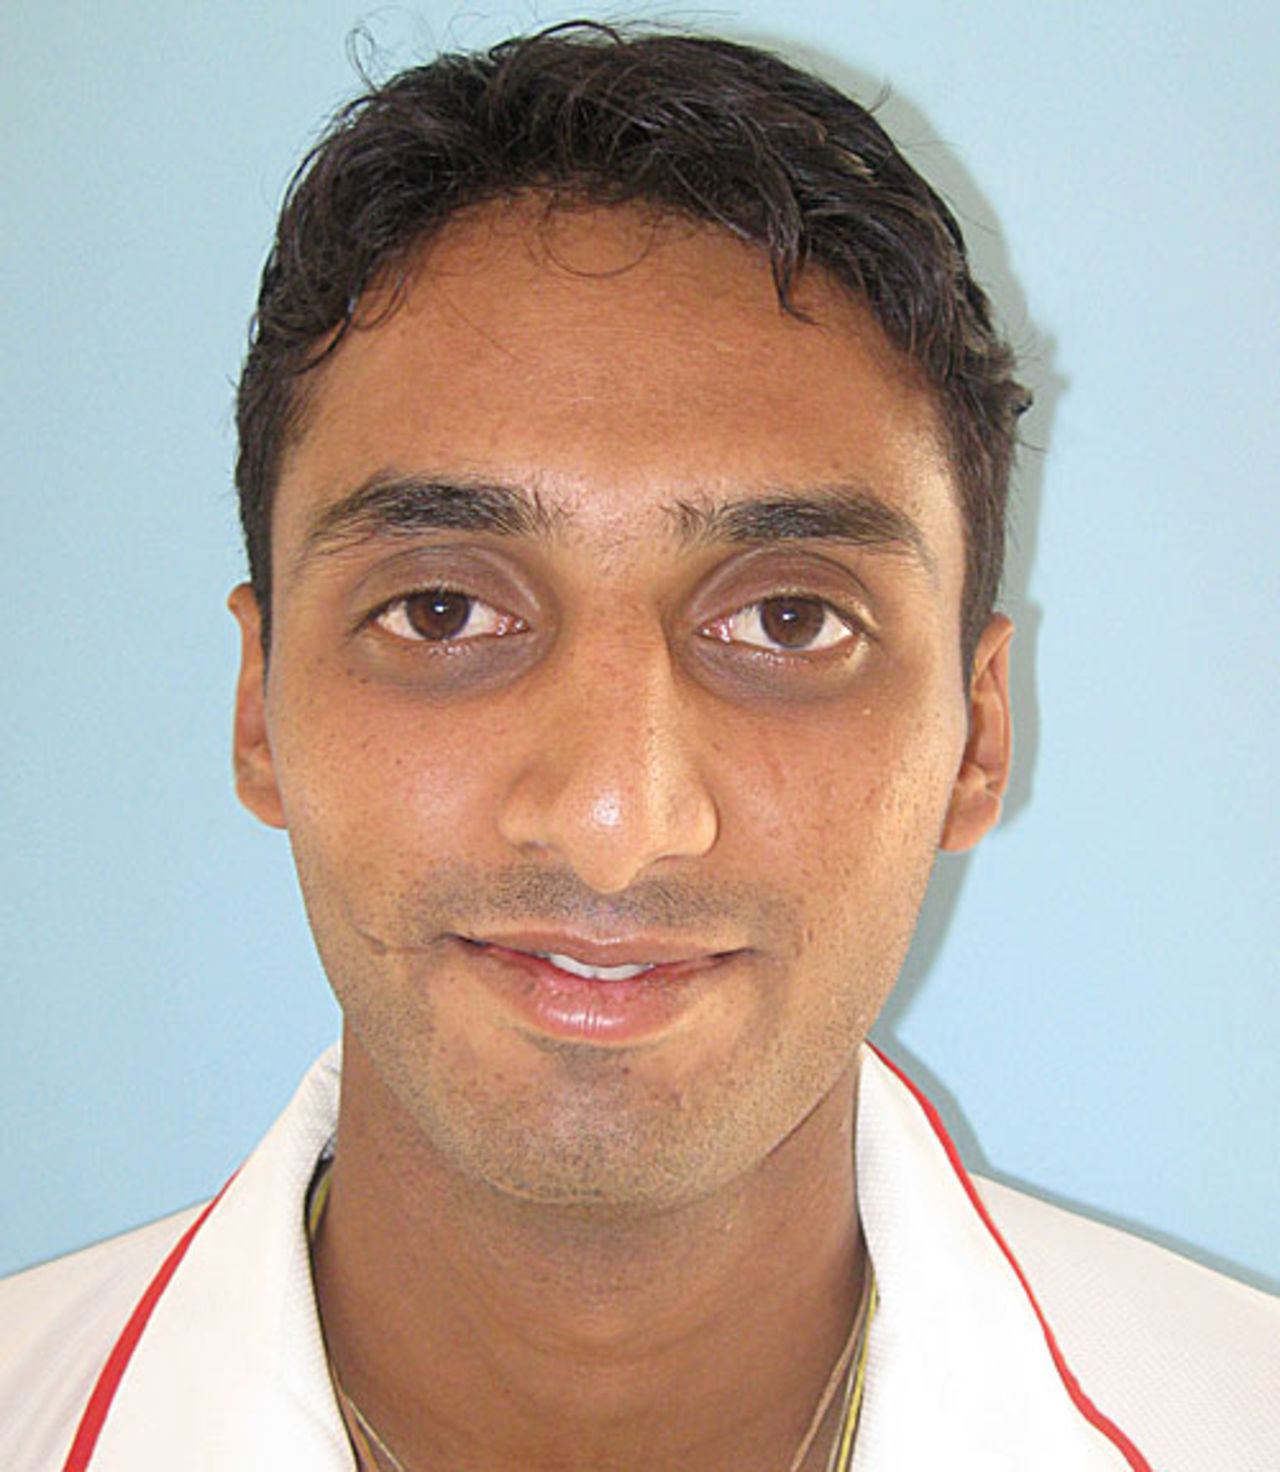 Sreenath Aravind, player portrait, July 2009